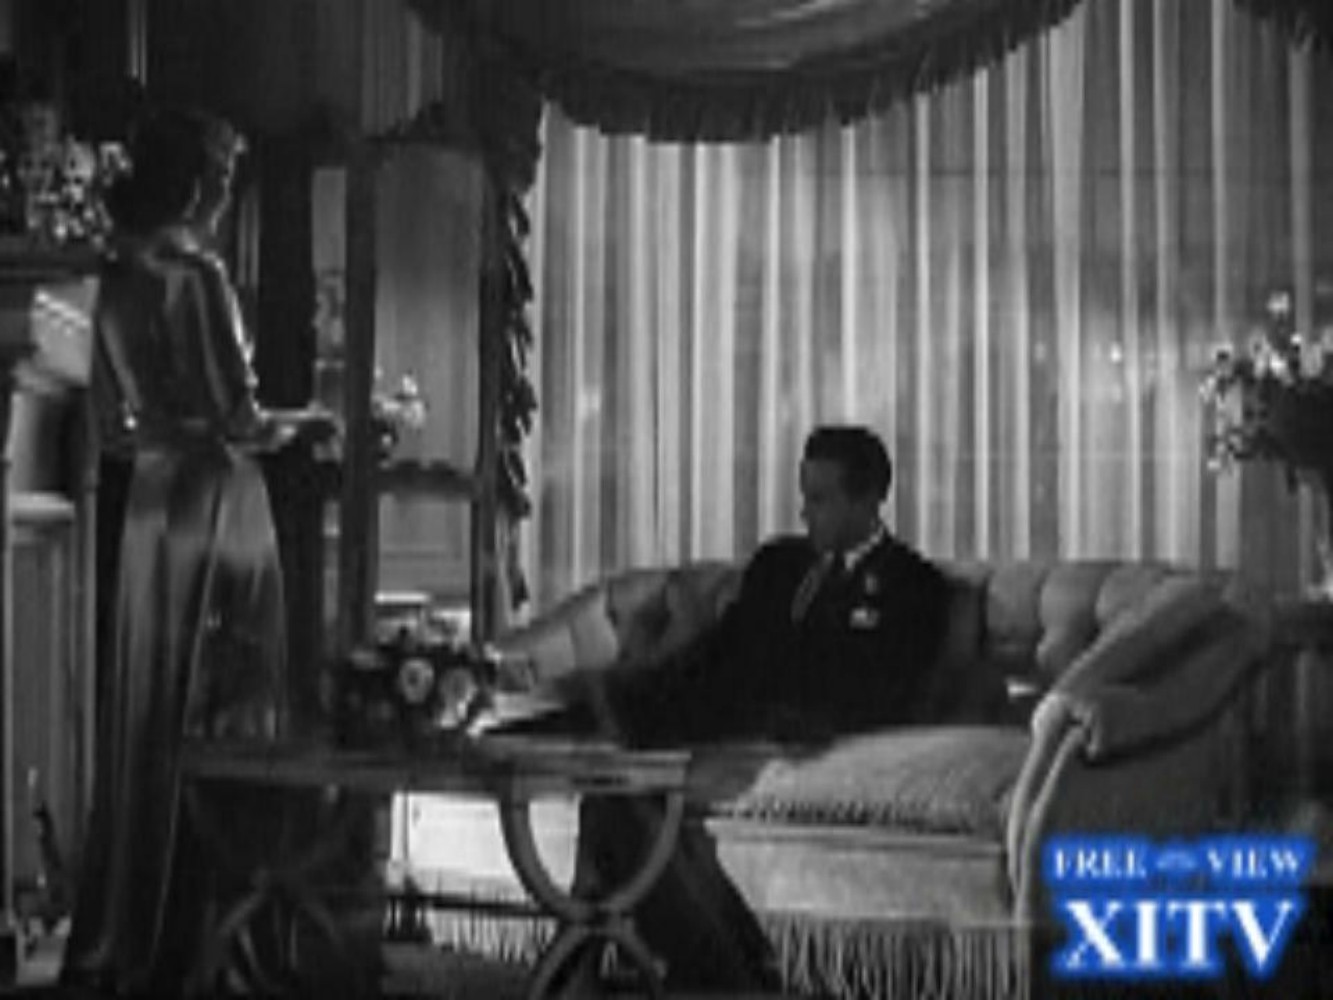 Watch Now! XITV FREE <> VIEW "CASABLANCA" Starring Ingrid Bergman and Humphrey Bogart! XITV Is Must See TV!